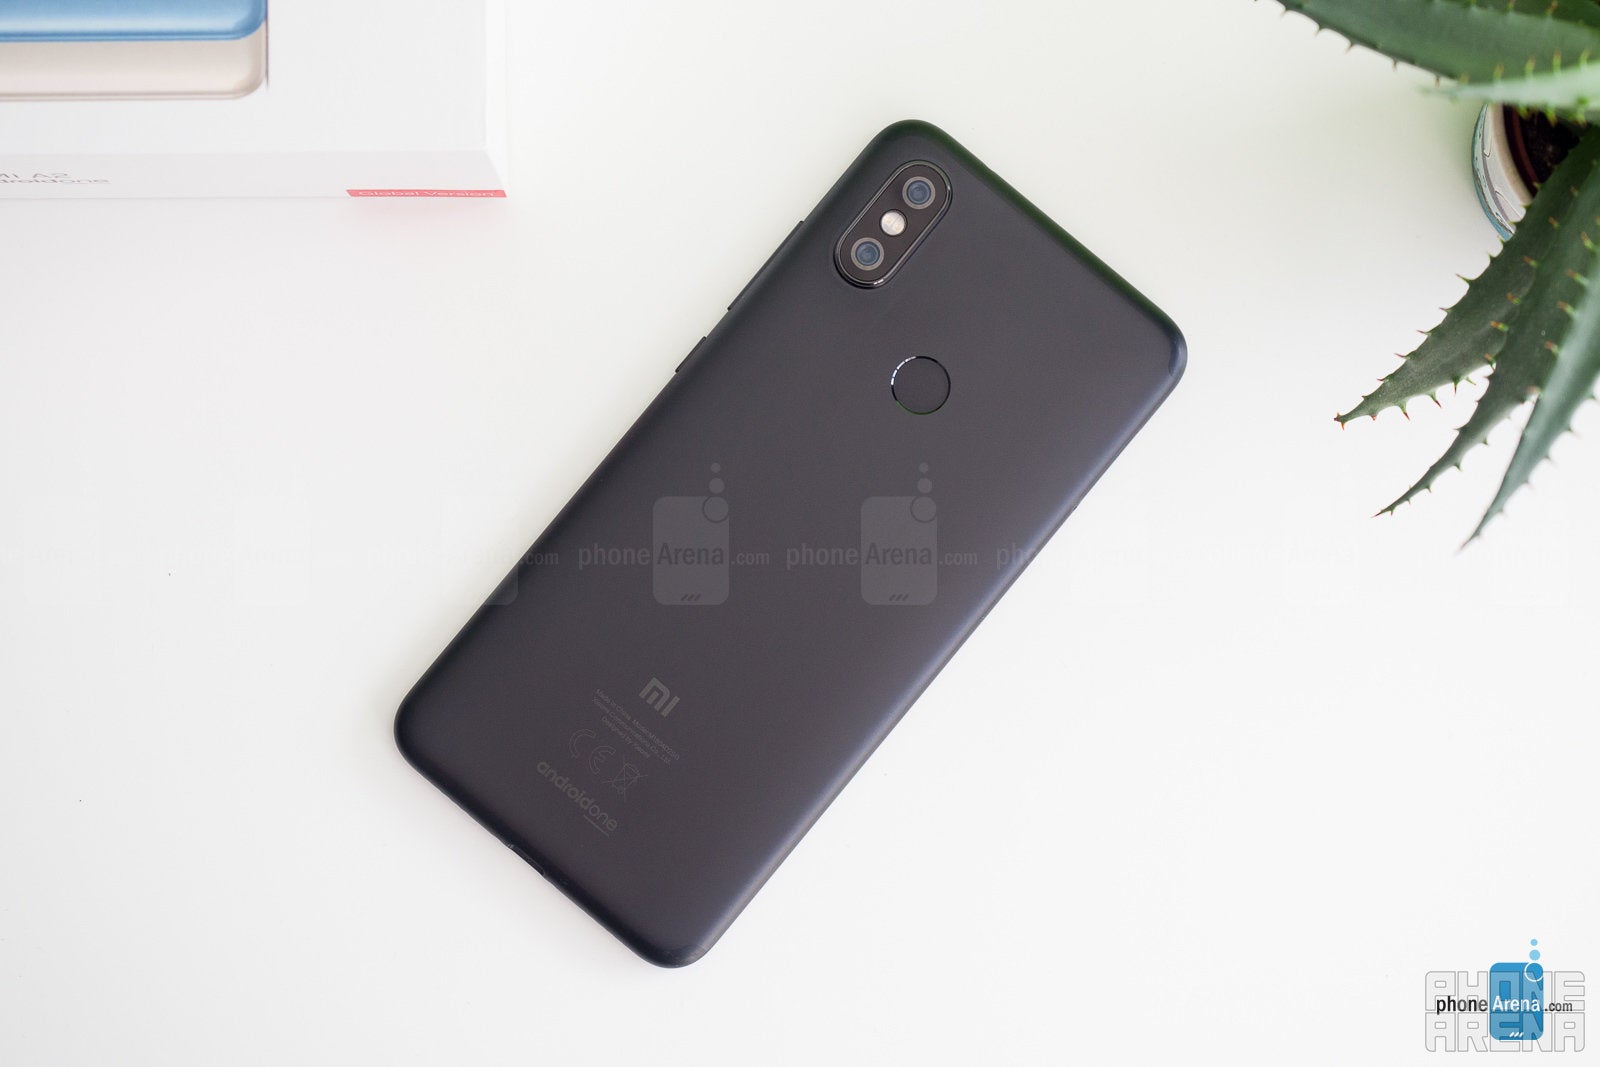 Xiaomi Mi A2 Review - PhoneArena